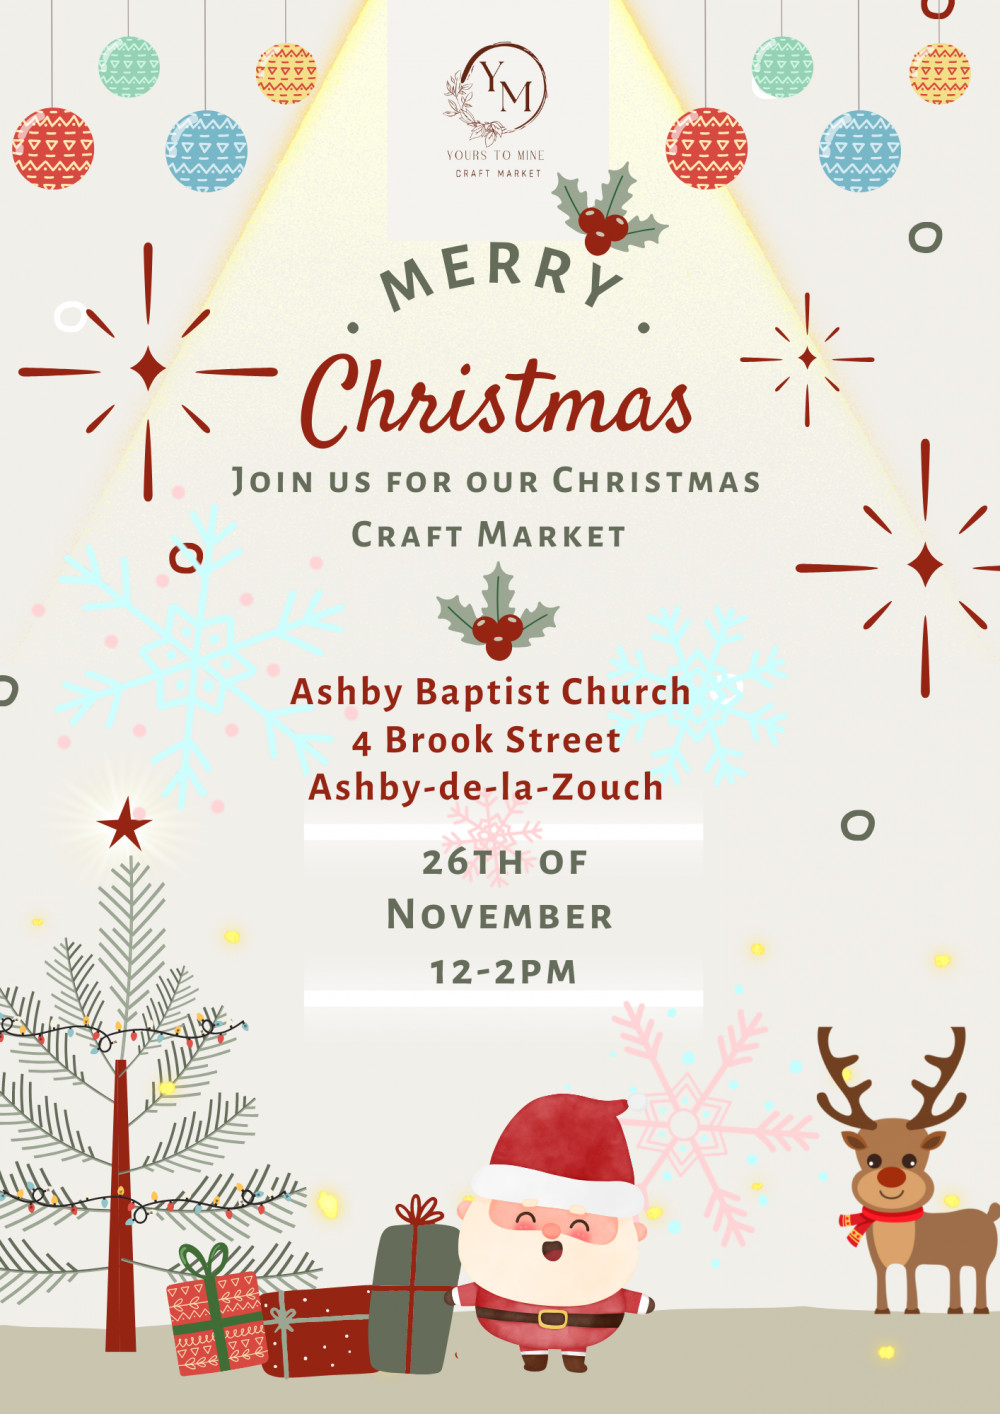 The Christmas Craft Market at Ashby Baptist Church